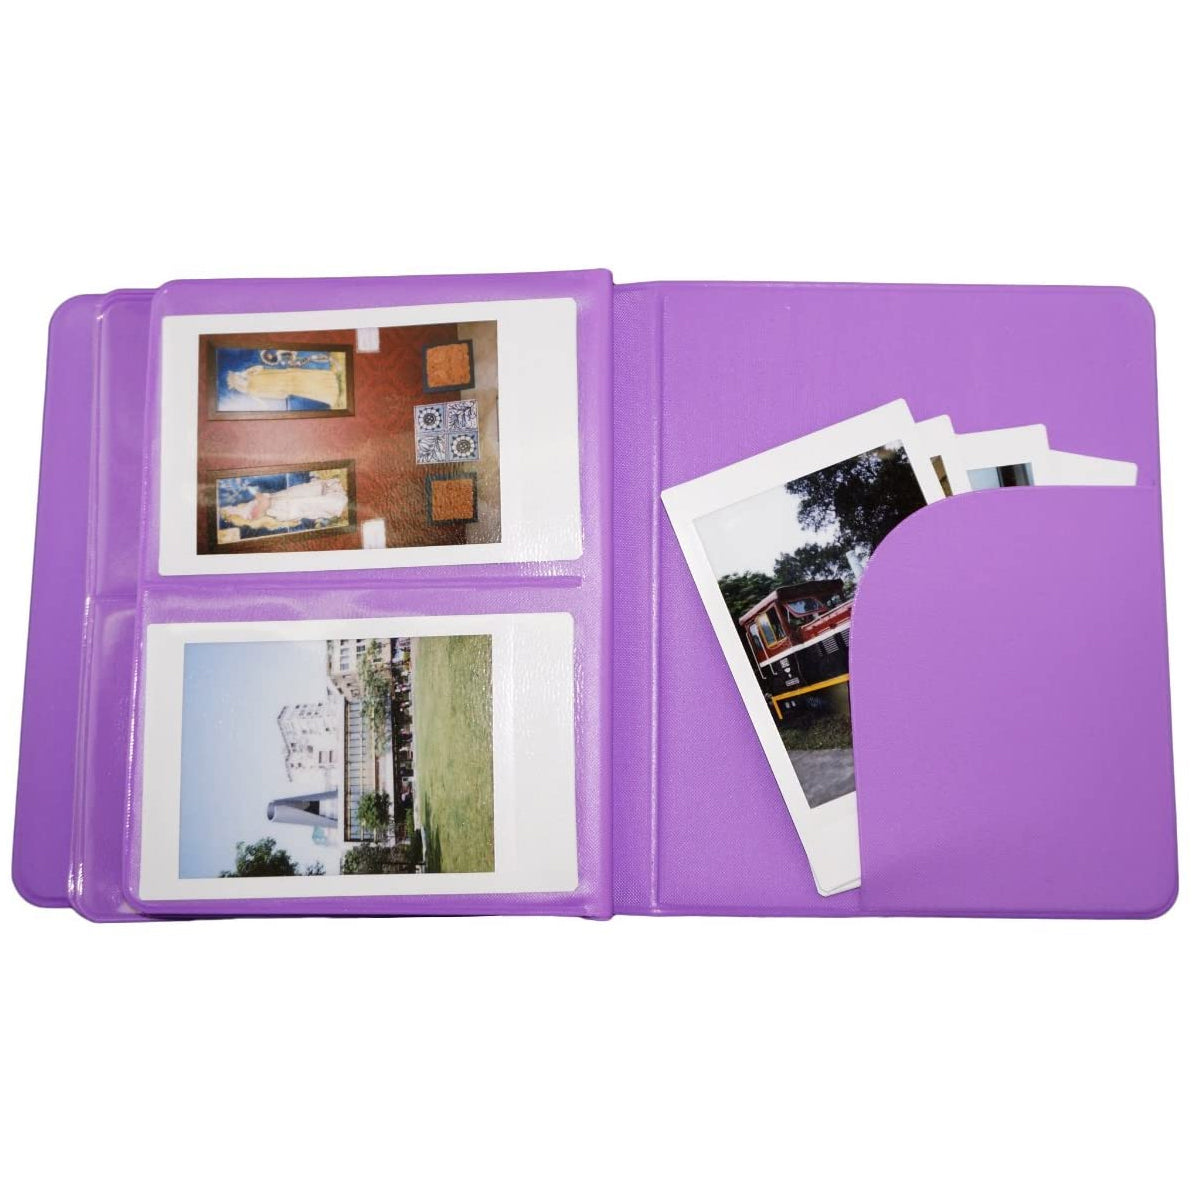 Fujifilm Instax Mini 10X1 rainbow Instant Film with Instax Time Photo Album 64 Sheets (Violet Purple)